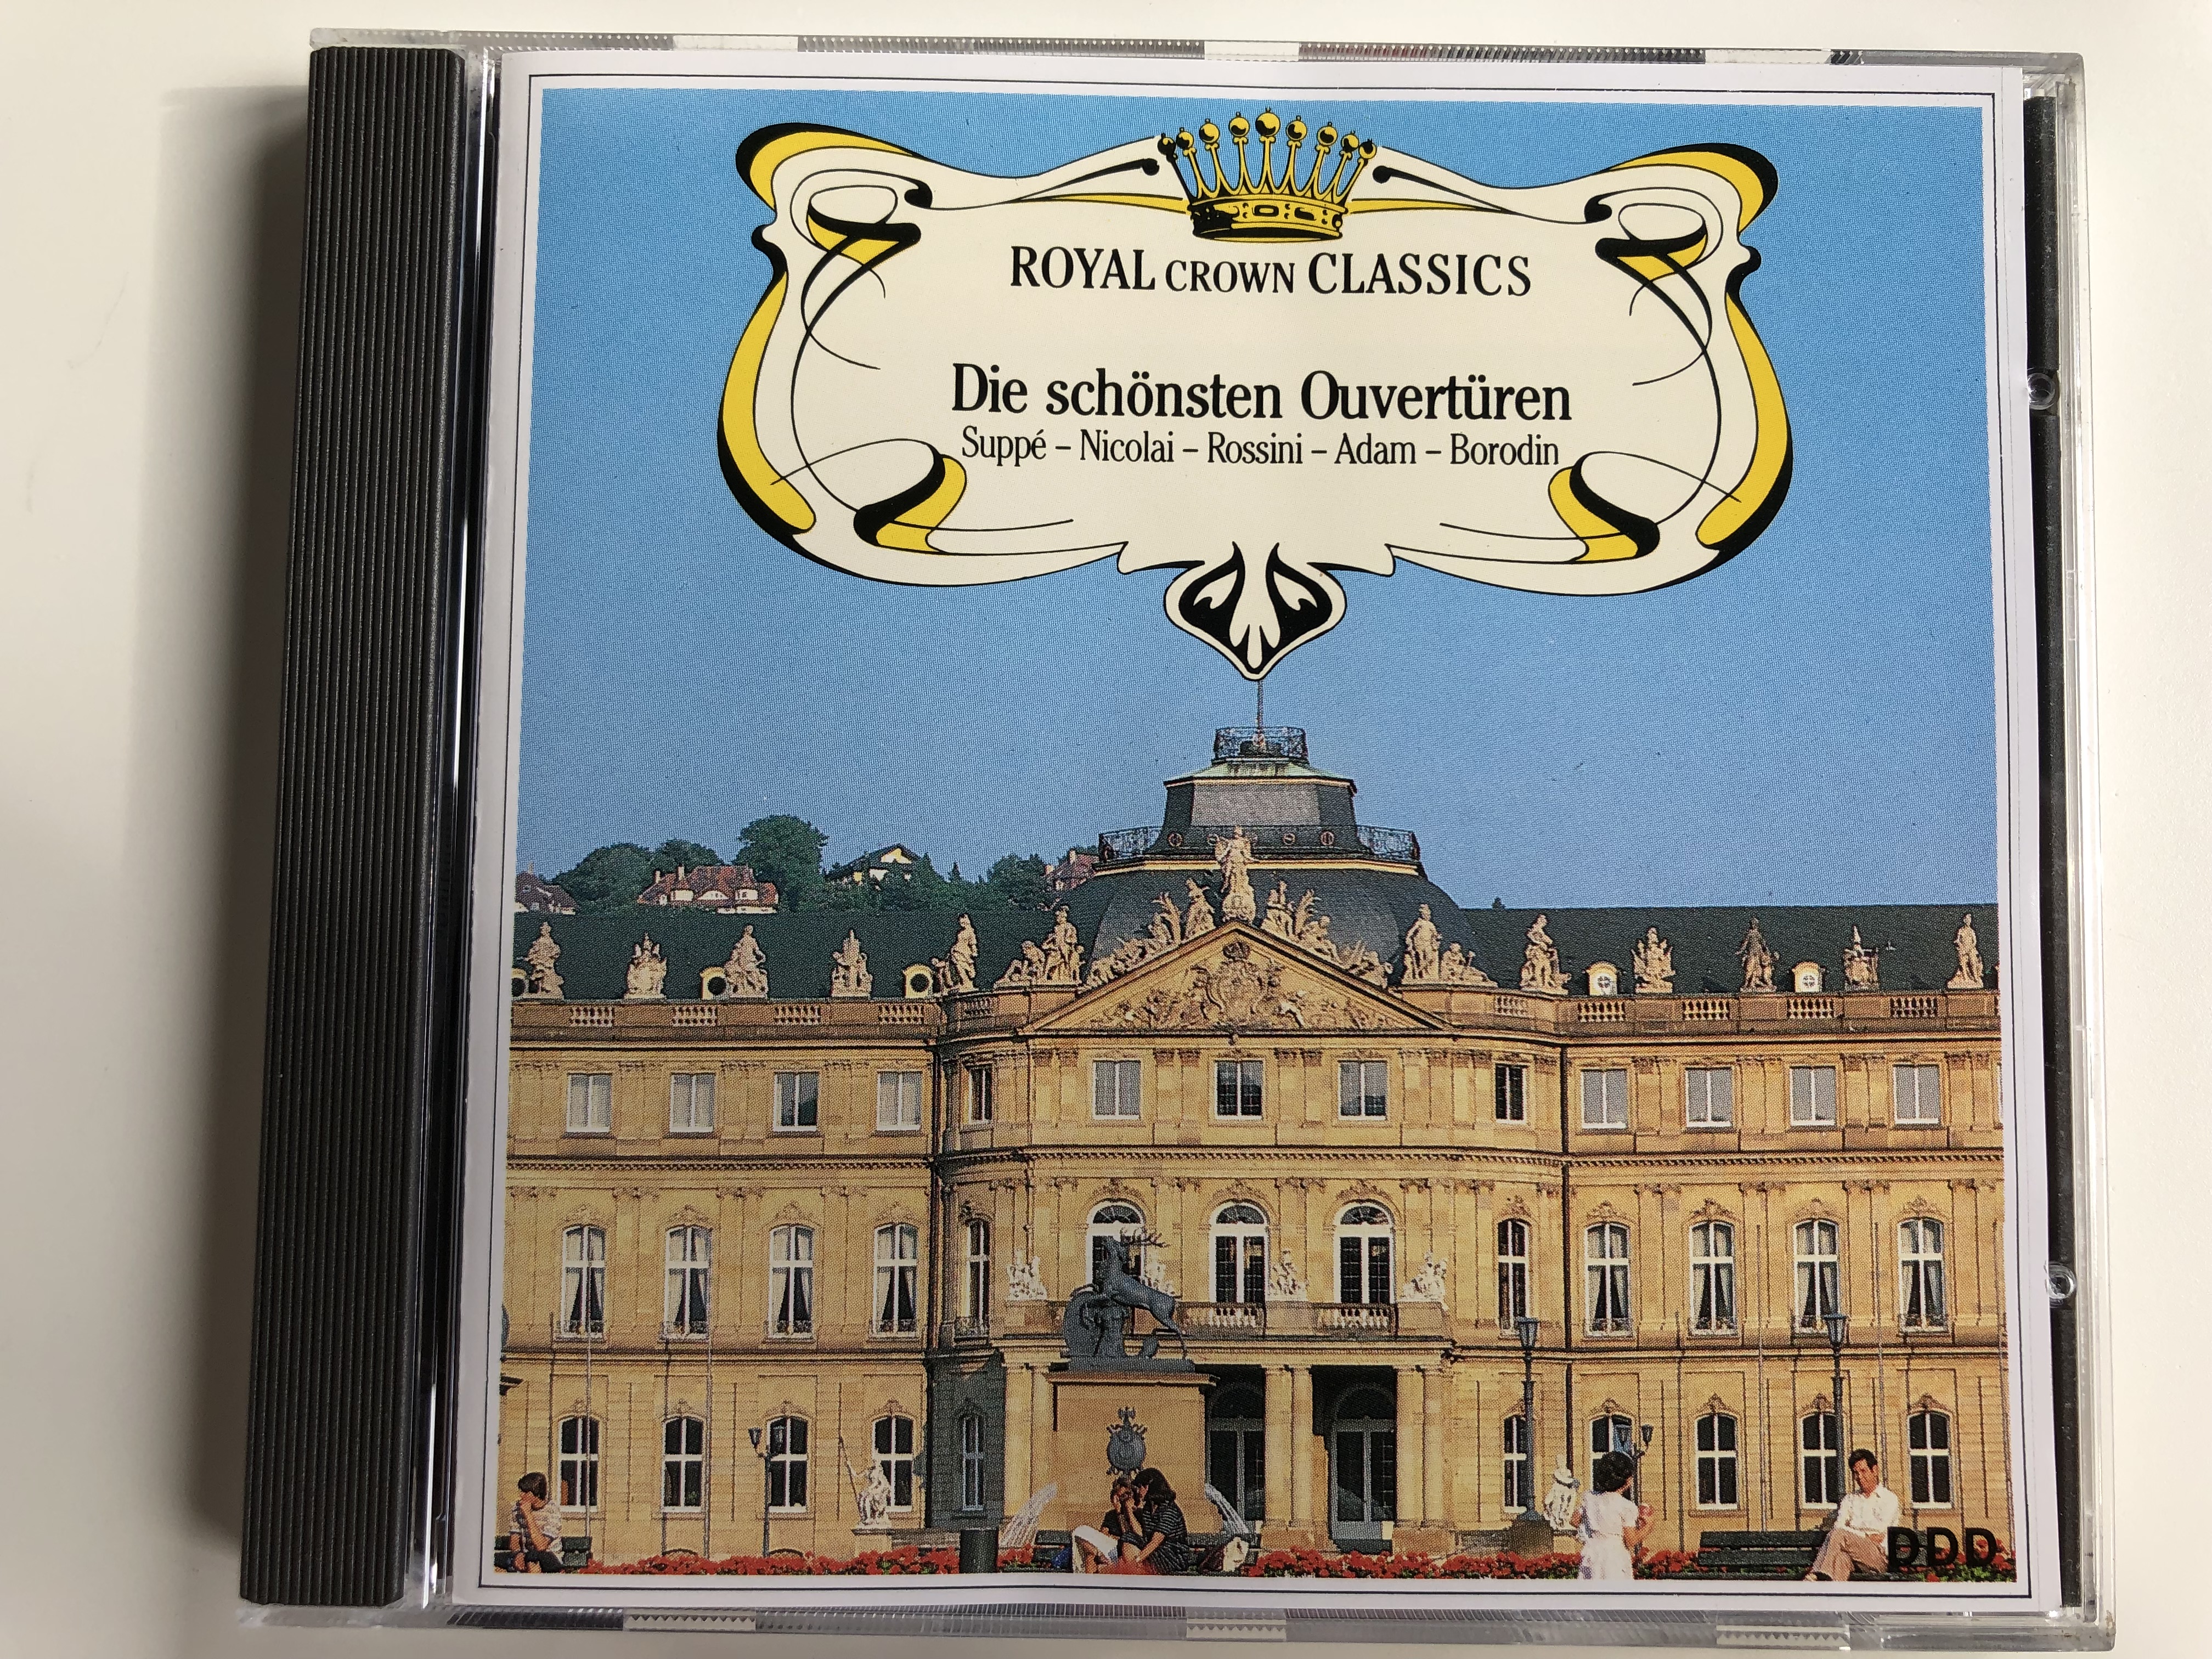 royal-crown-classics-die-schonsten-ouverturen-suppe-nicolai-rossini-adam-borodin-gema-audio-cd-1988-cd-65018-1-.jpg